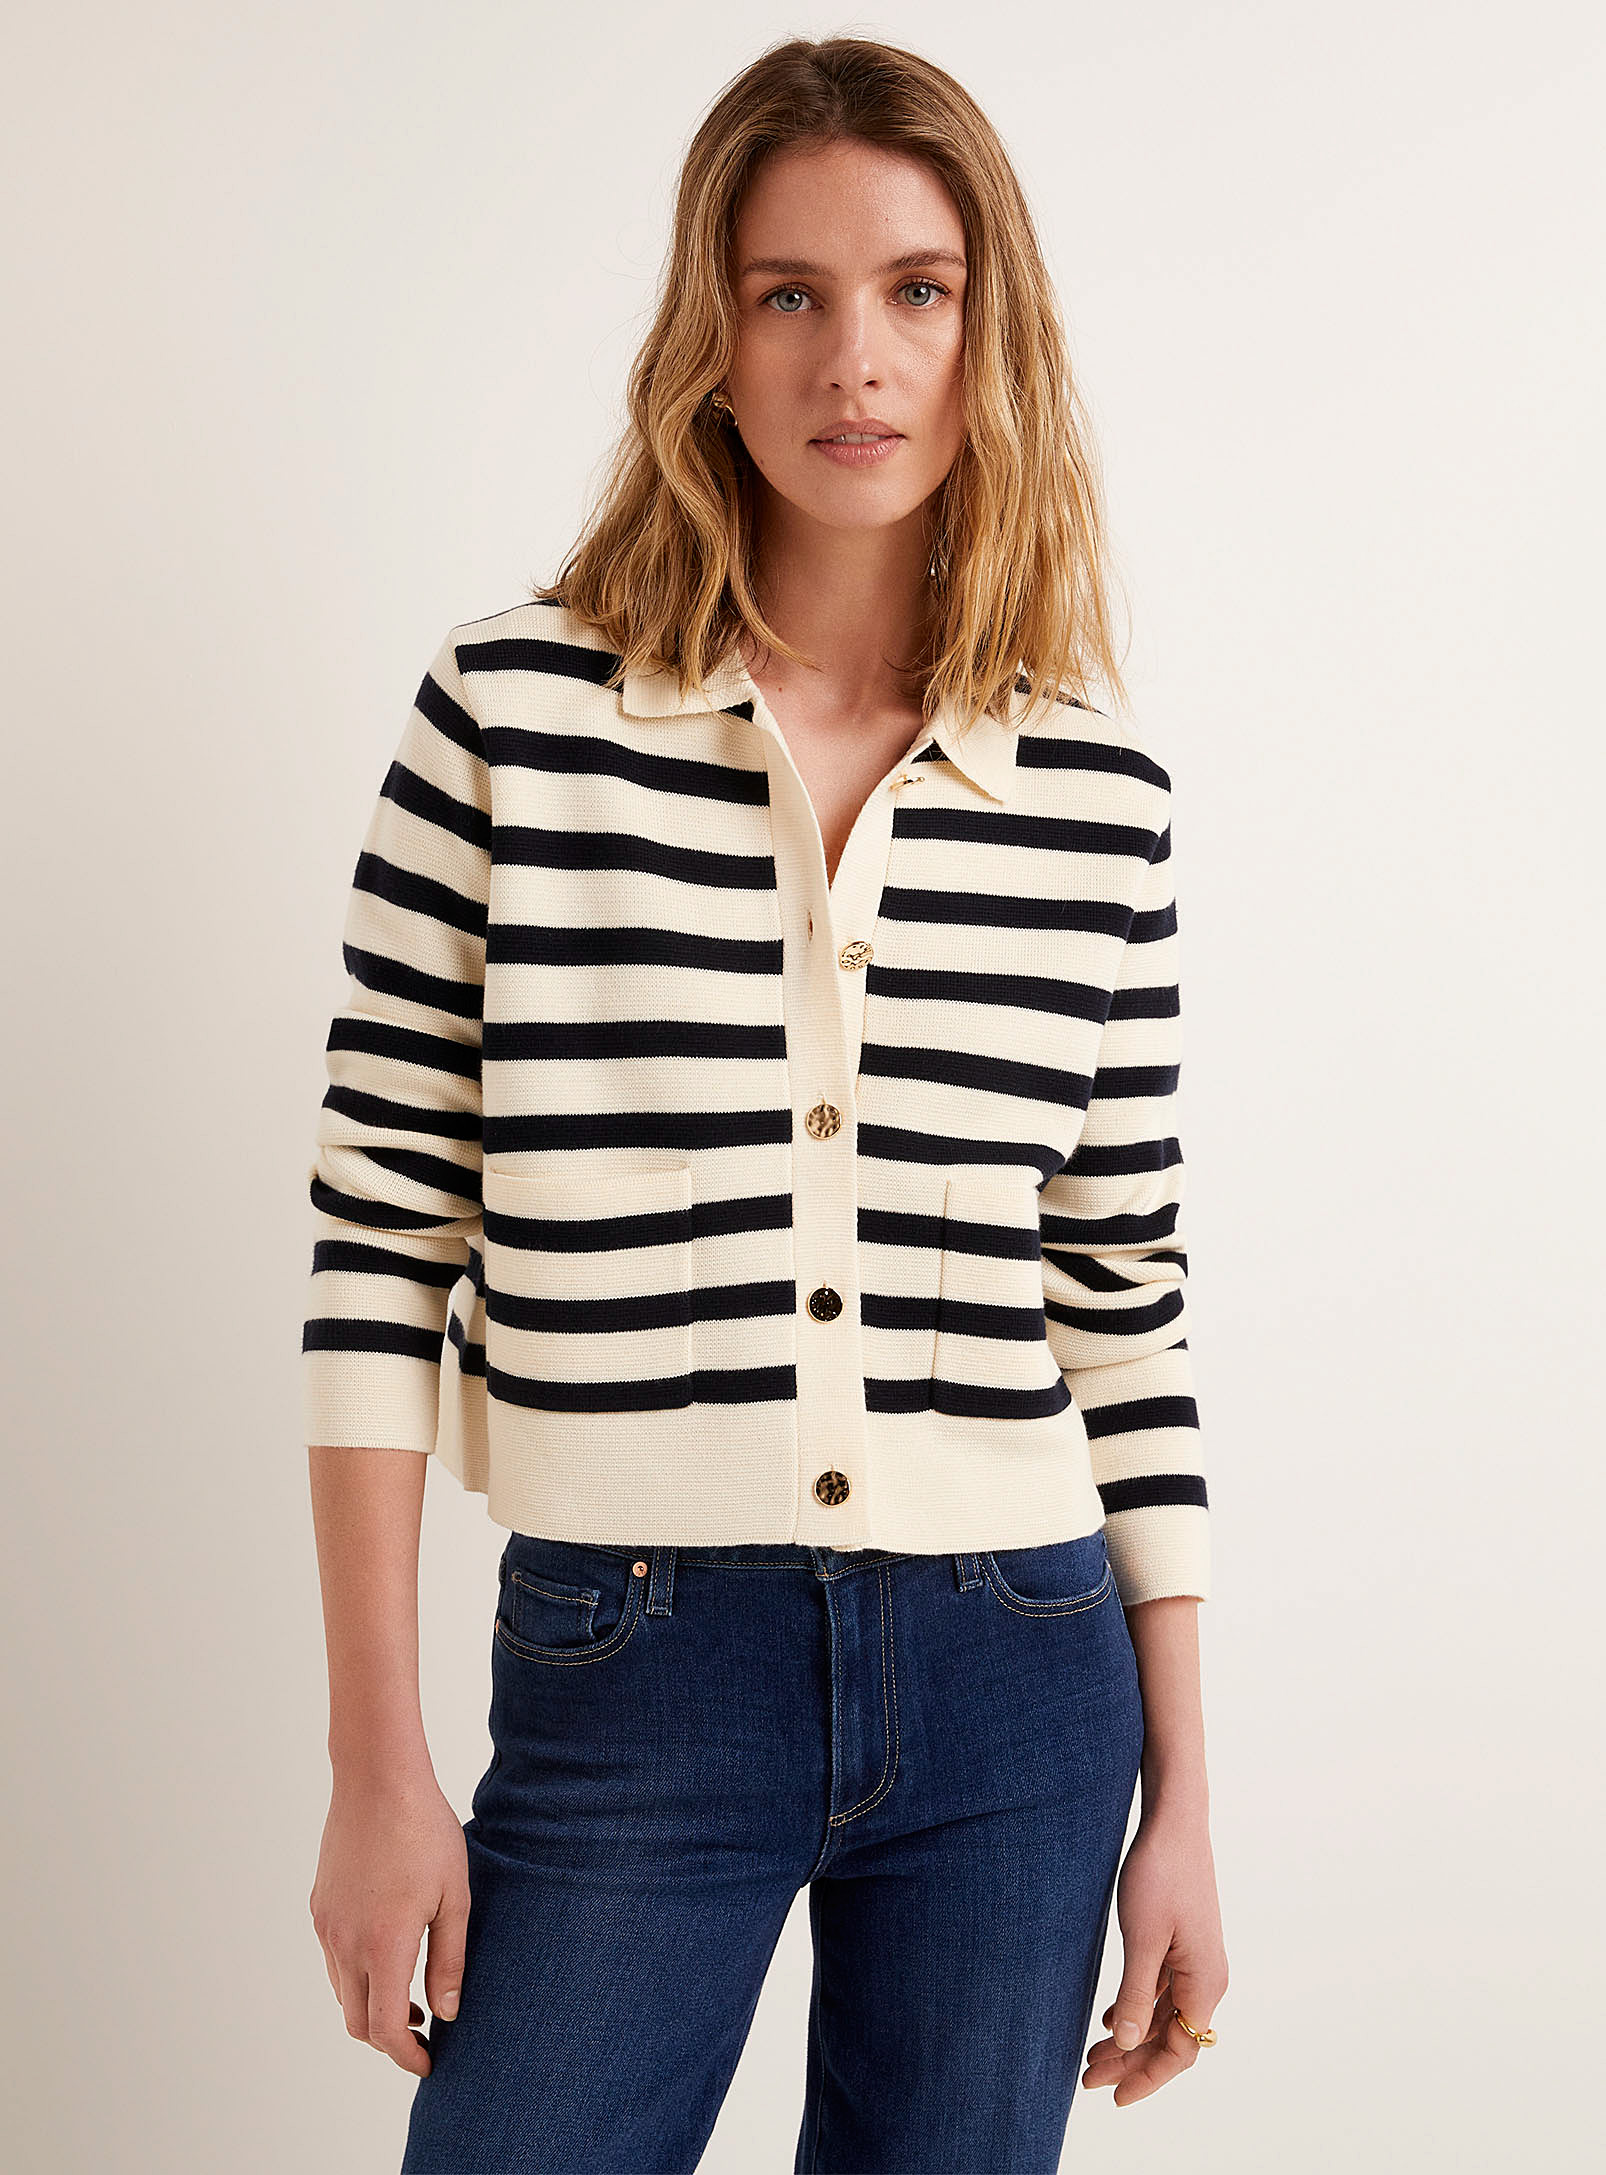 Contemporaine - Women's Golden buttons striped Cardigan Sweater